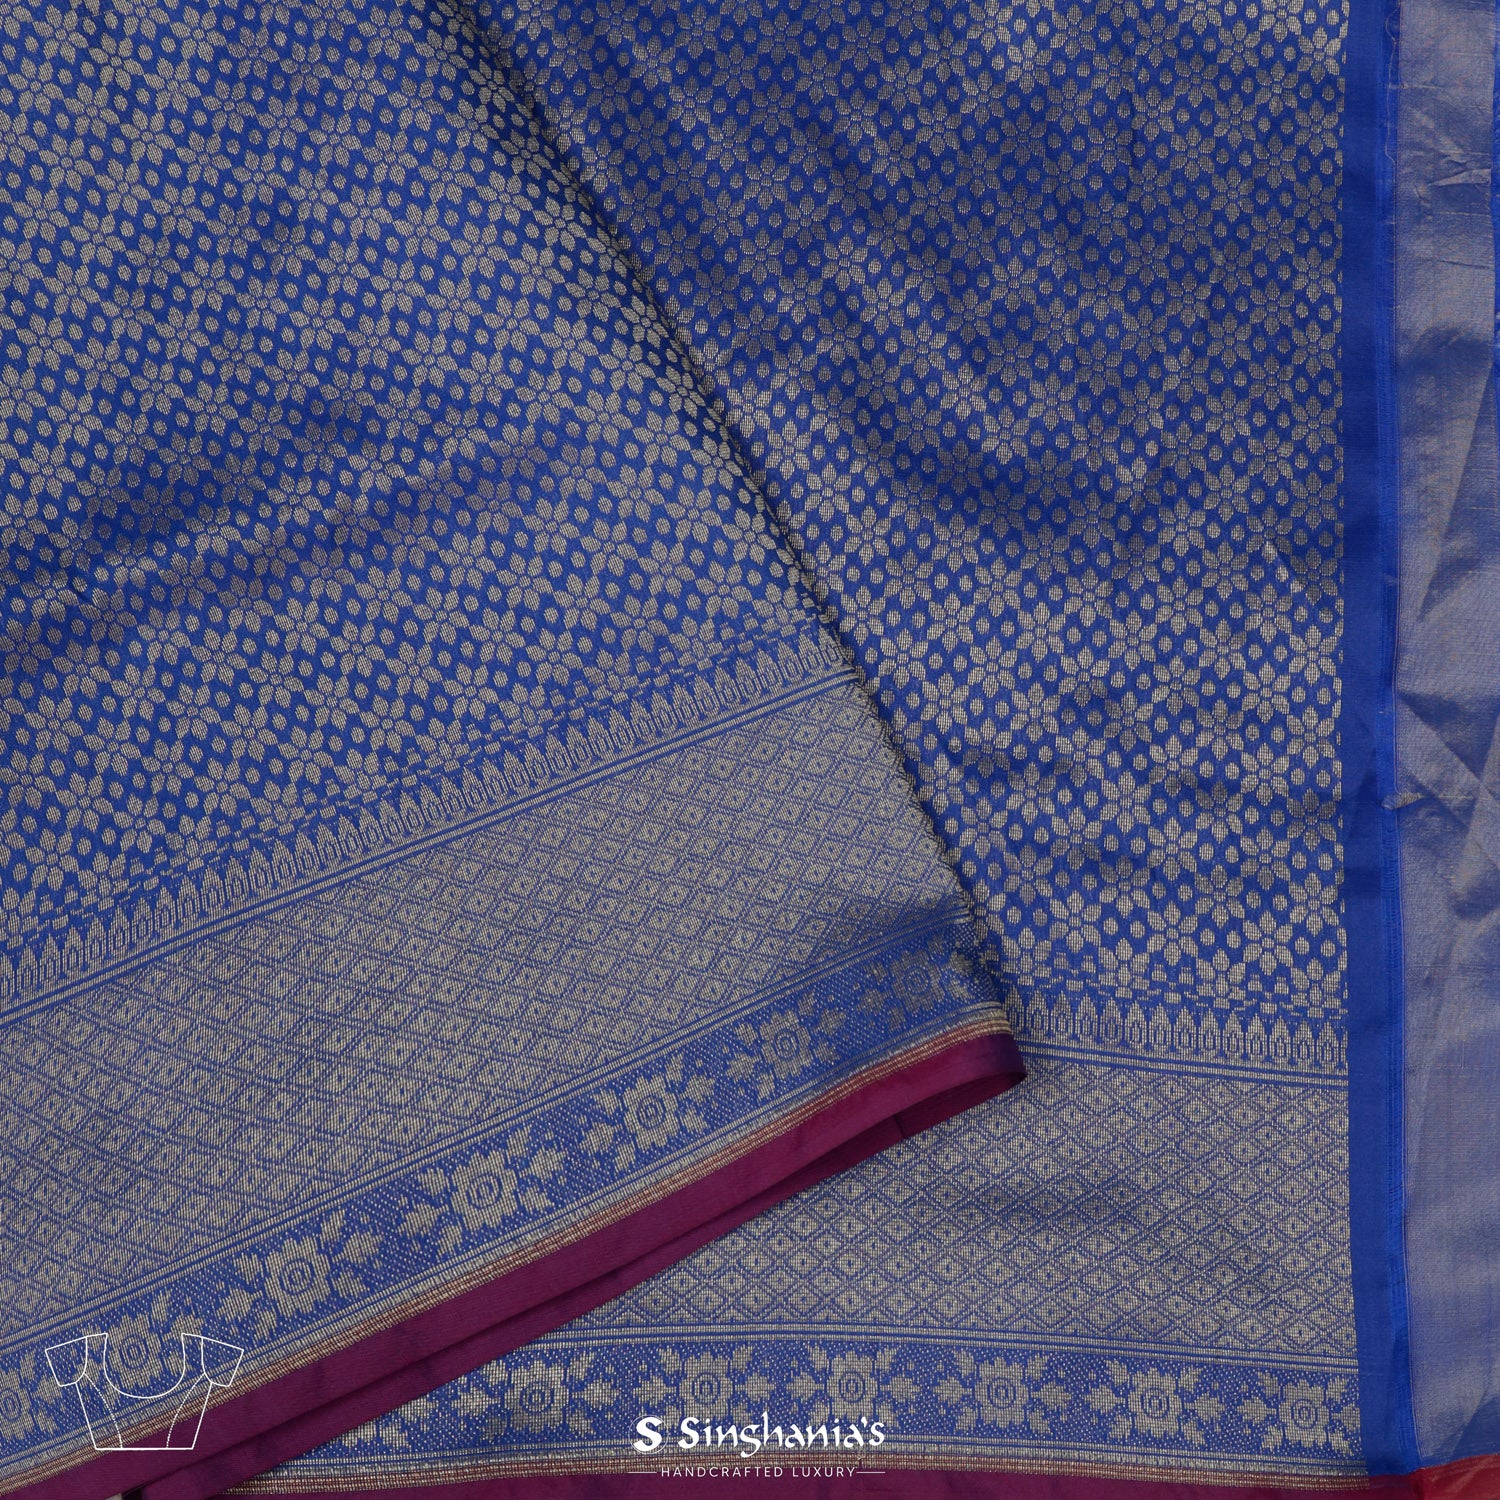 Boeing Blue Banarasi Saree With Floral Butti Weaving